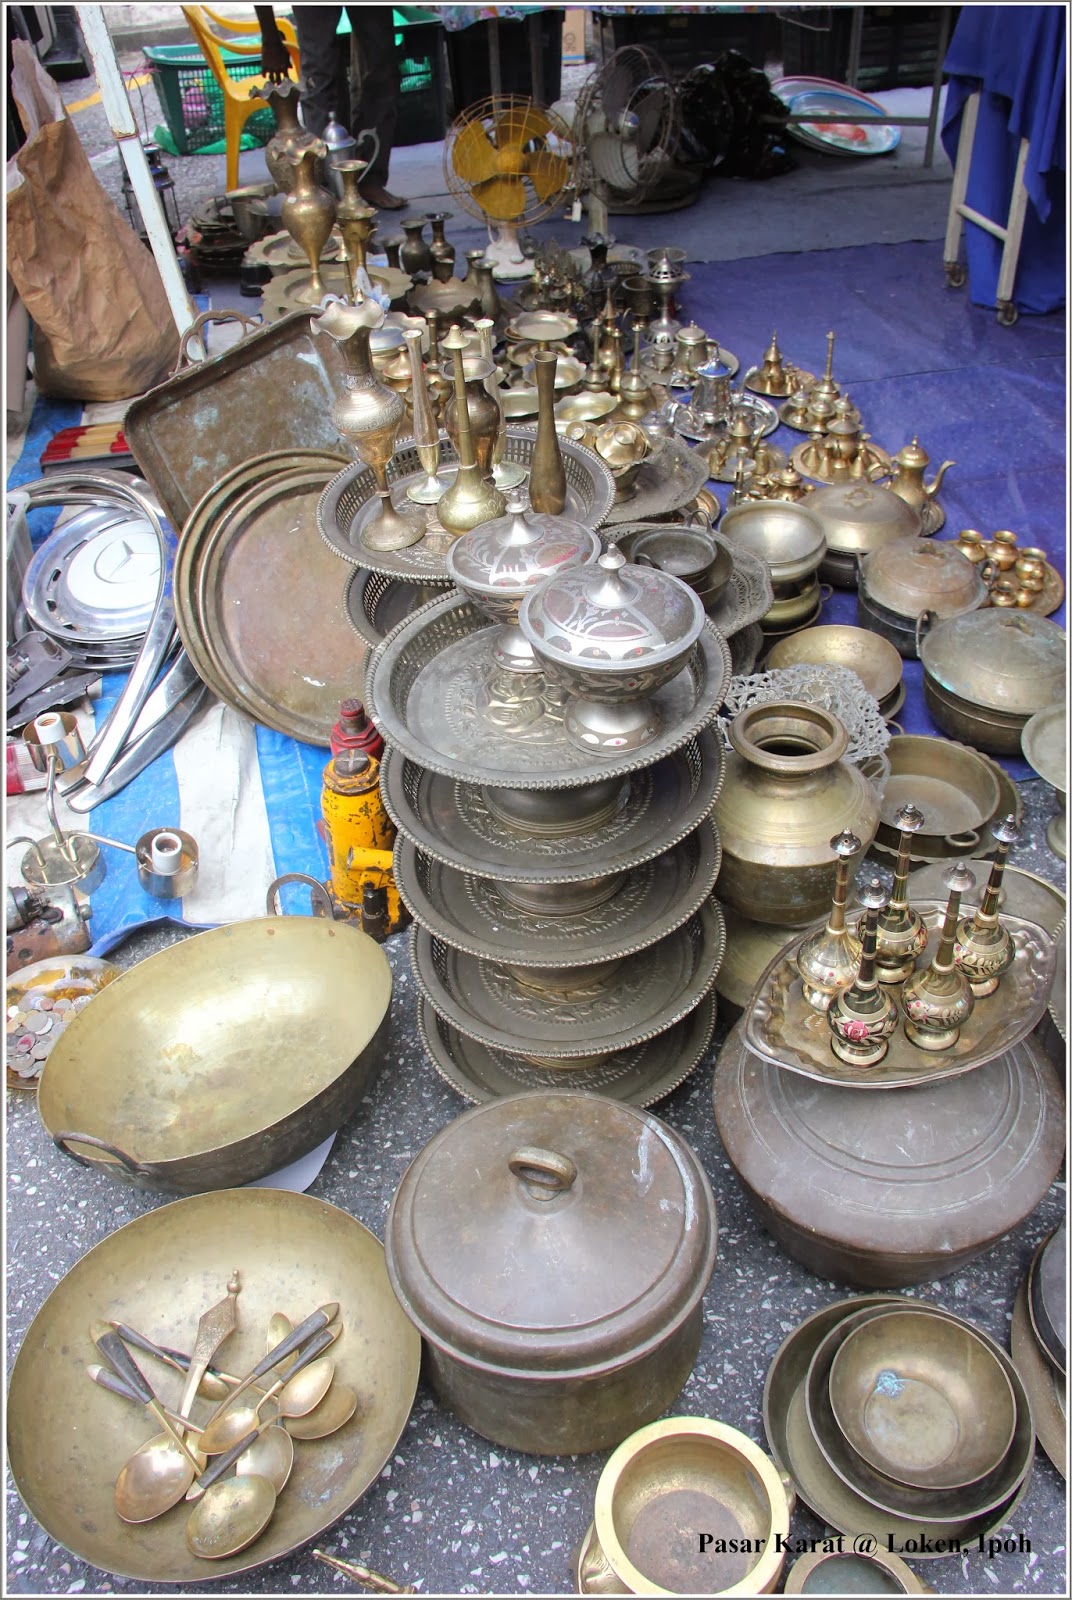 Cerita tentang SEGALA: Pasar Karat @ Loken, Ipoh